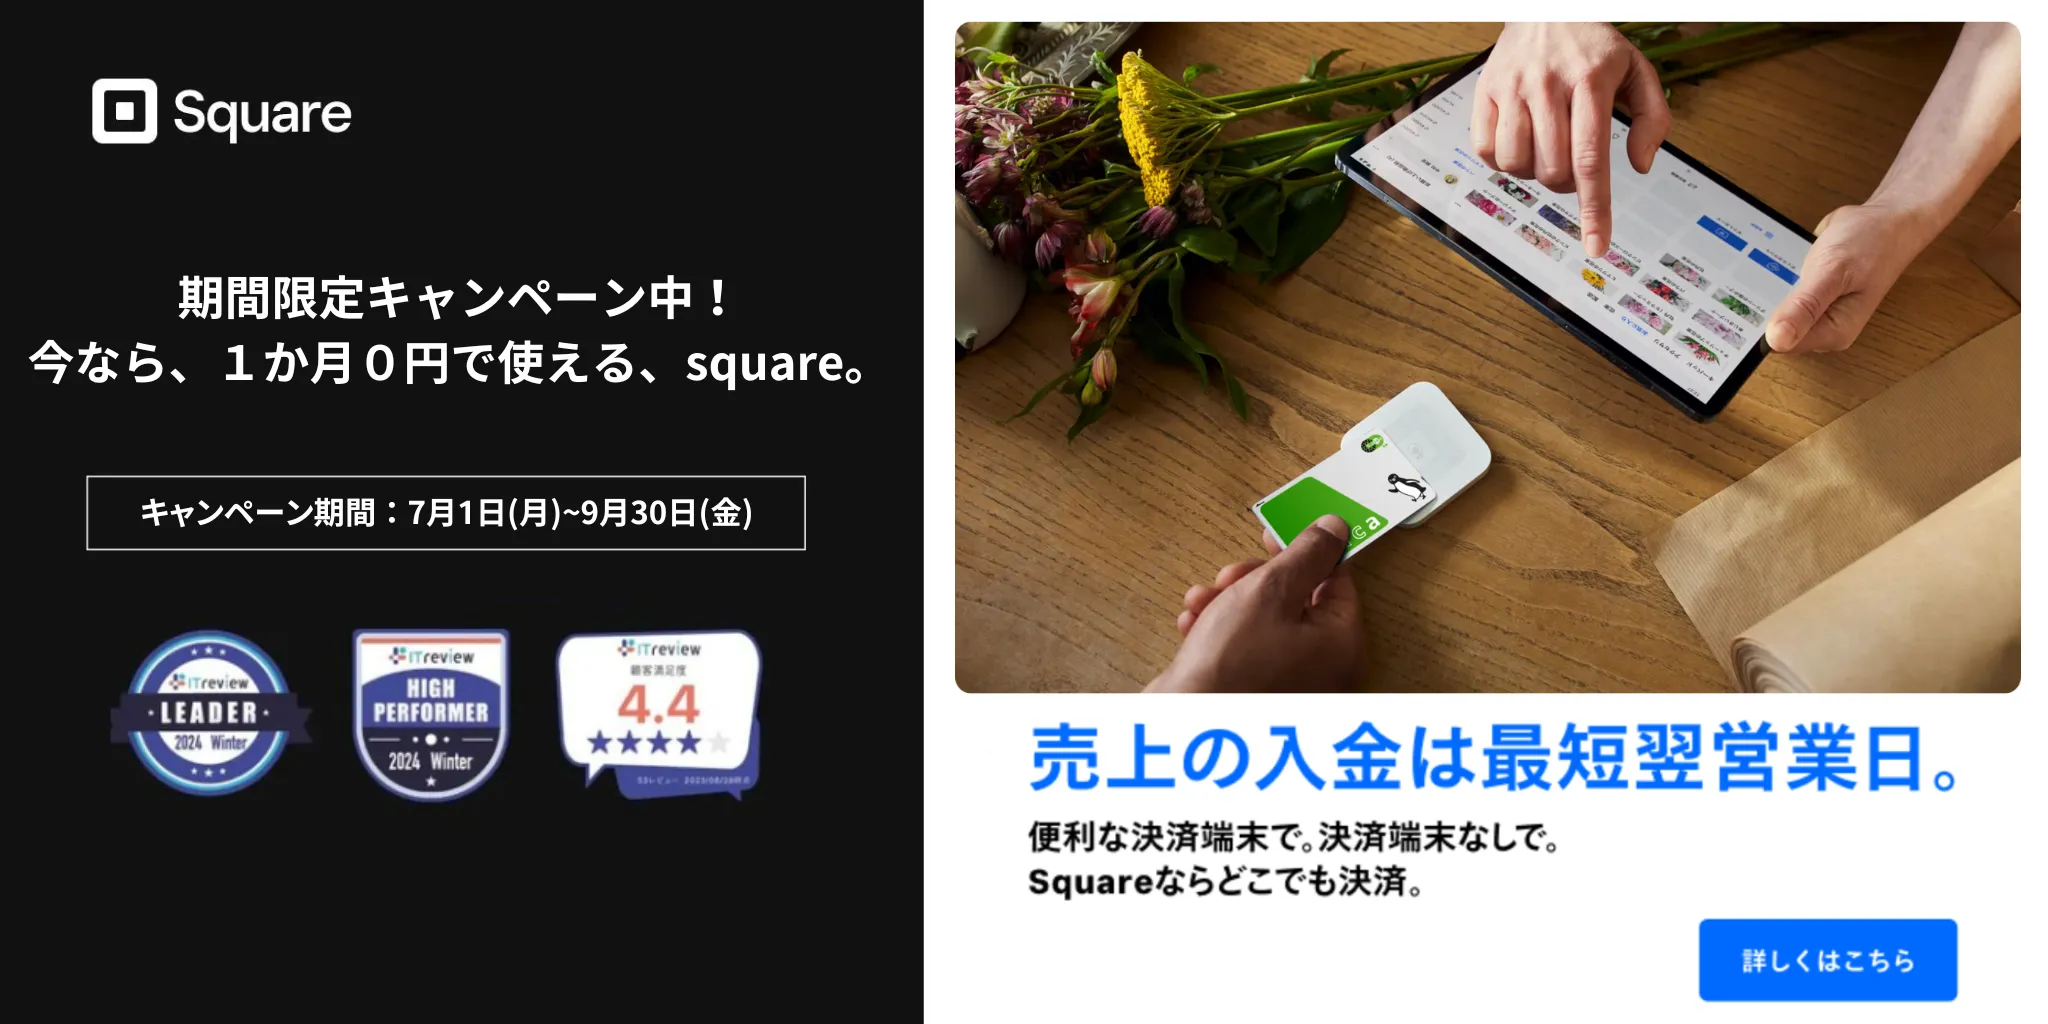 Square Readerの商品説明